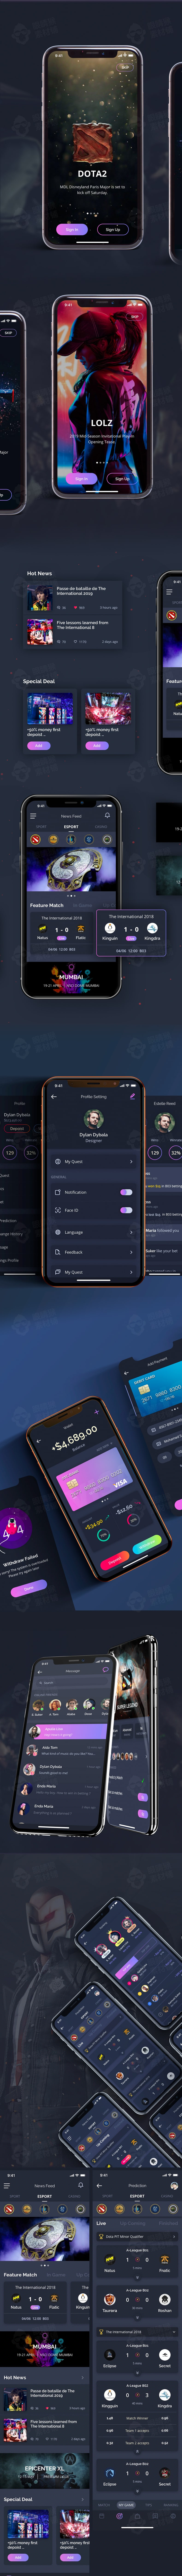 bettor App UI Kit 炫酷游戏社交APP用户界面设计模板素材-UI/UX-到位啦UI